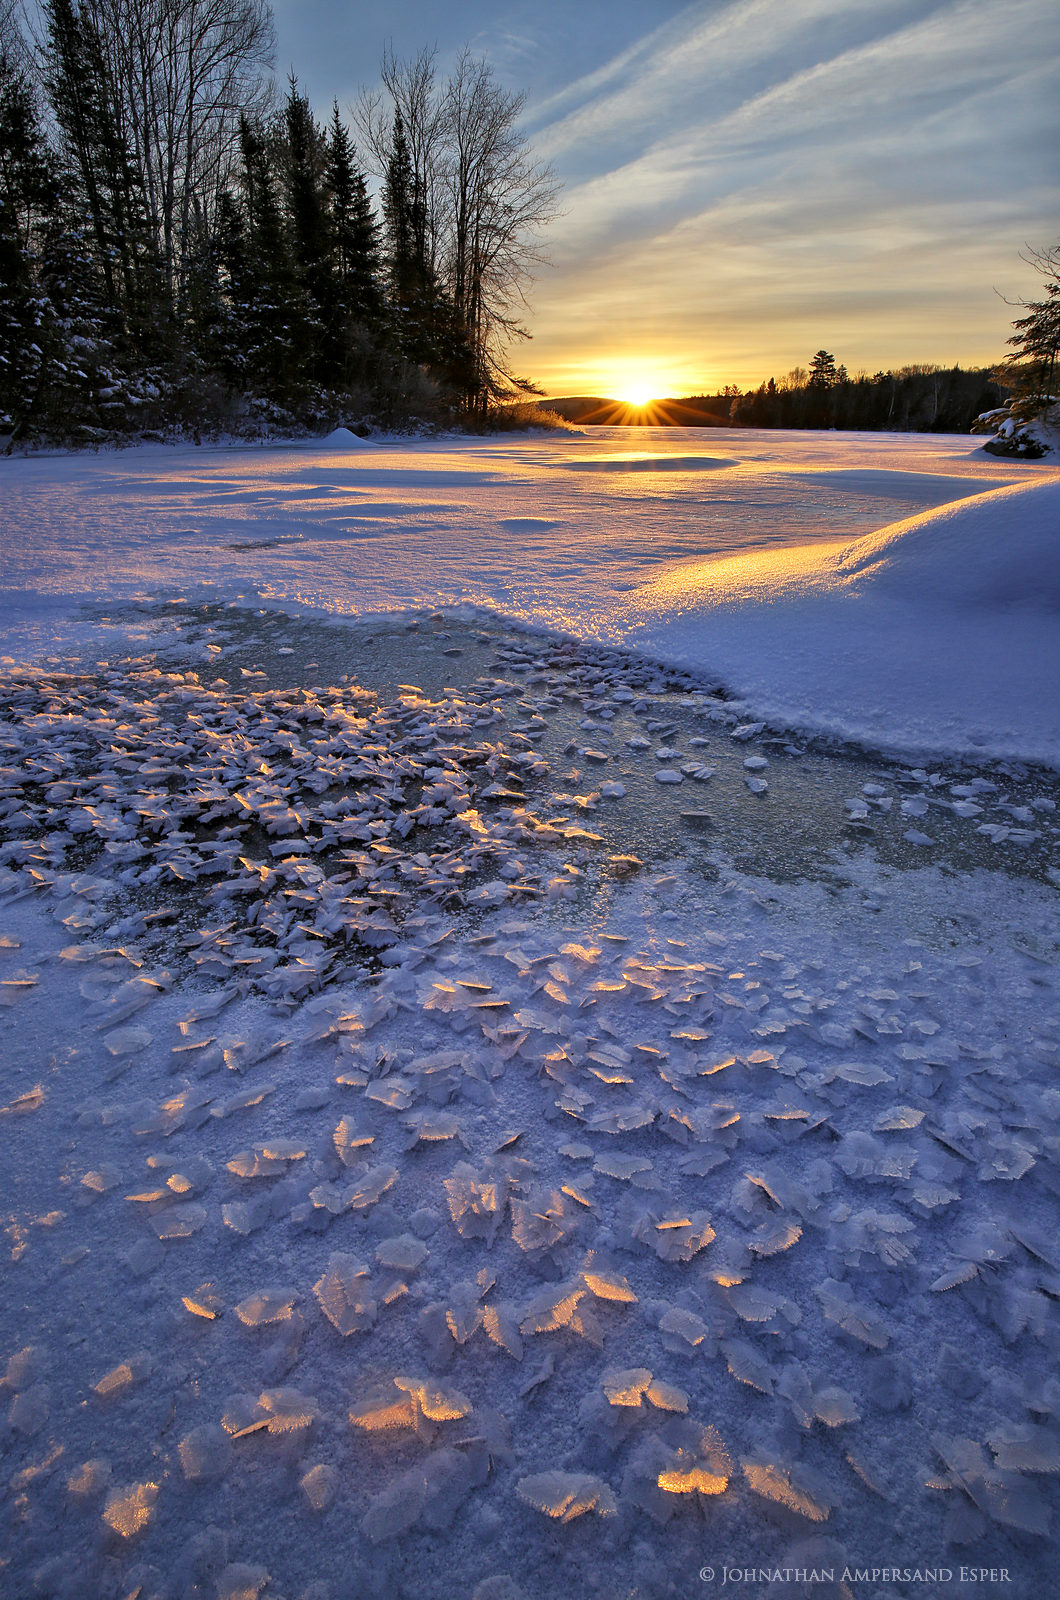 Lake Durant,ice,snow,cystals,flakes,snowflakes,sunrise,winter,